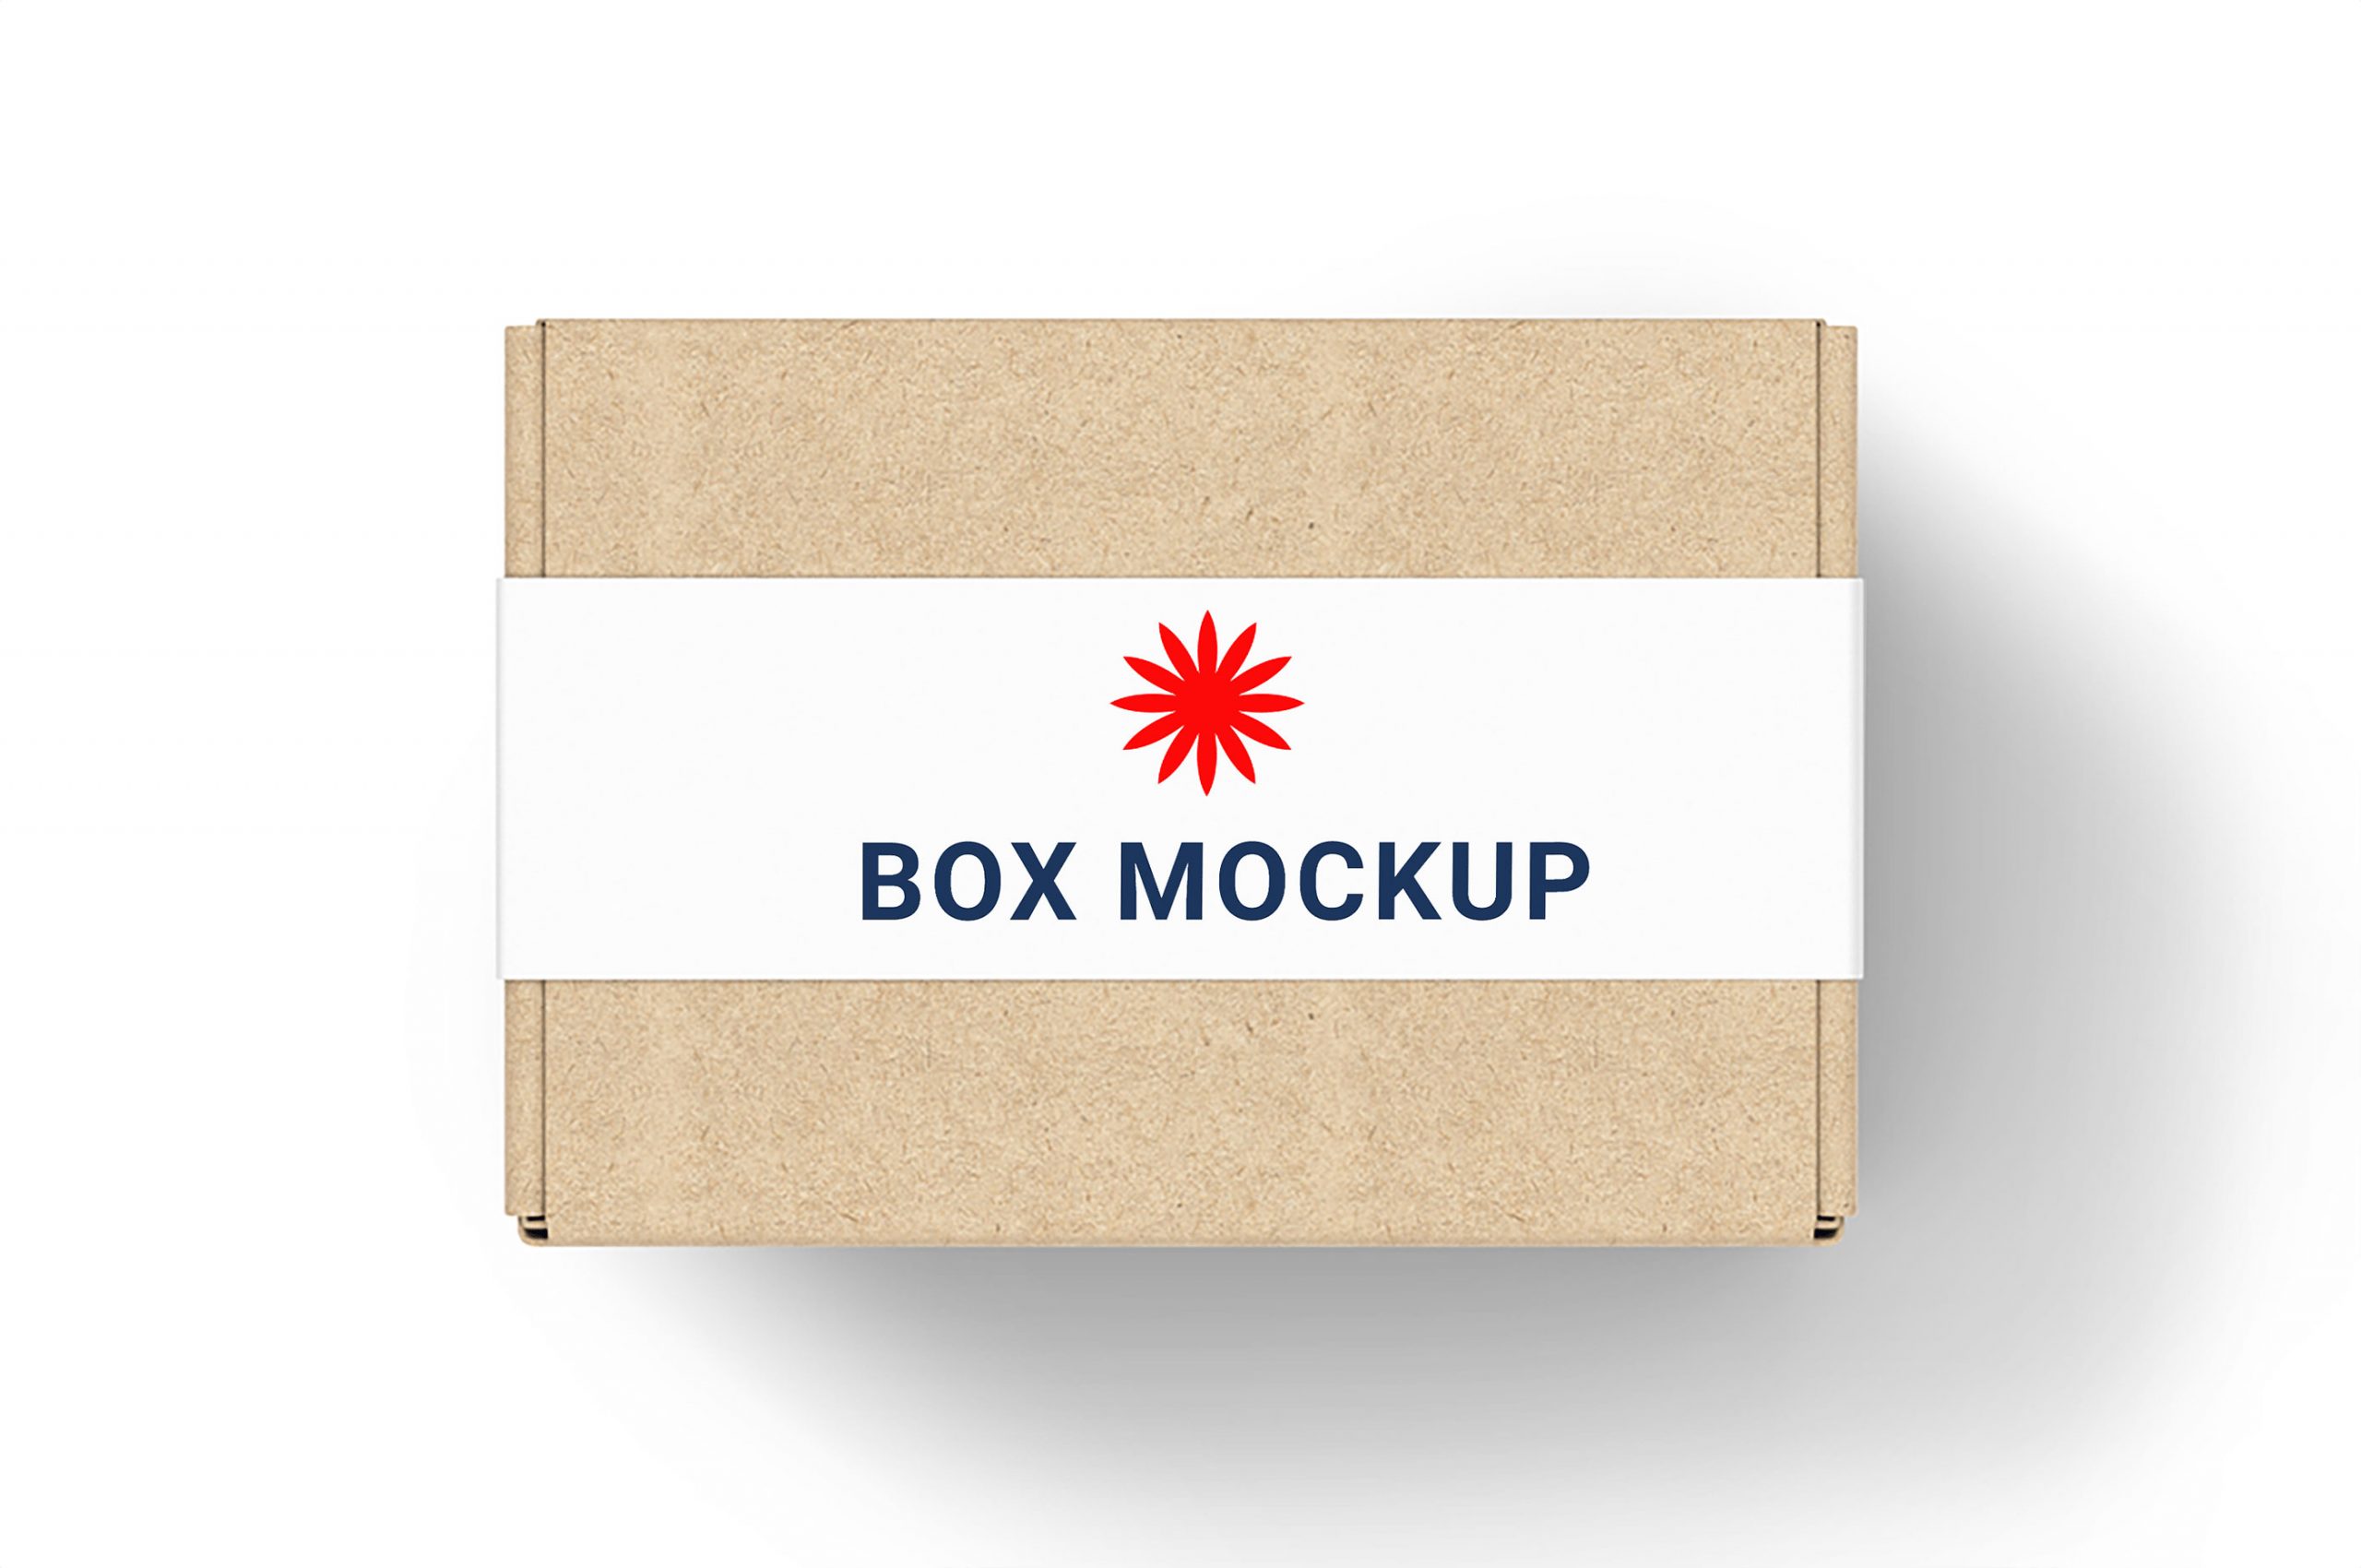 Free Blank Tuck In Flap Packaging Paper Box